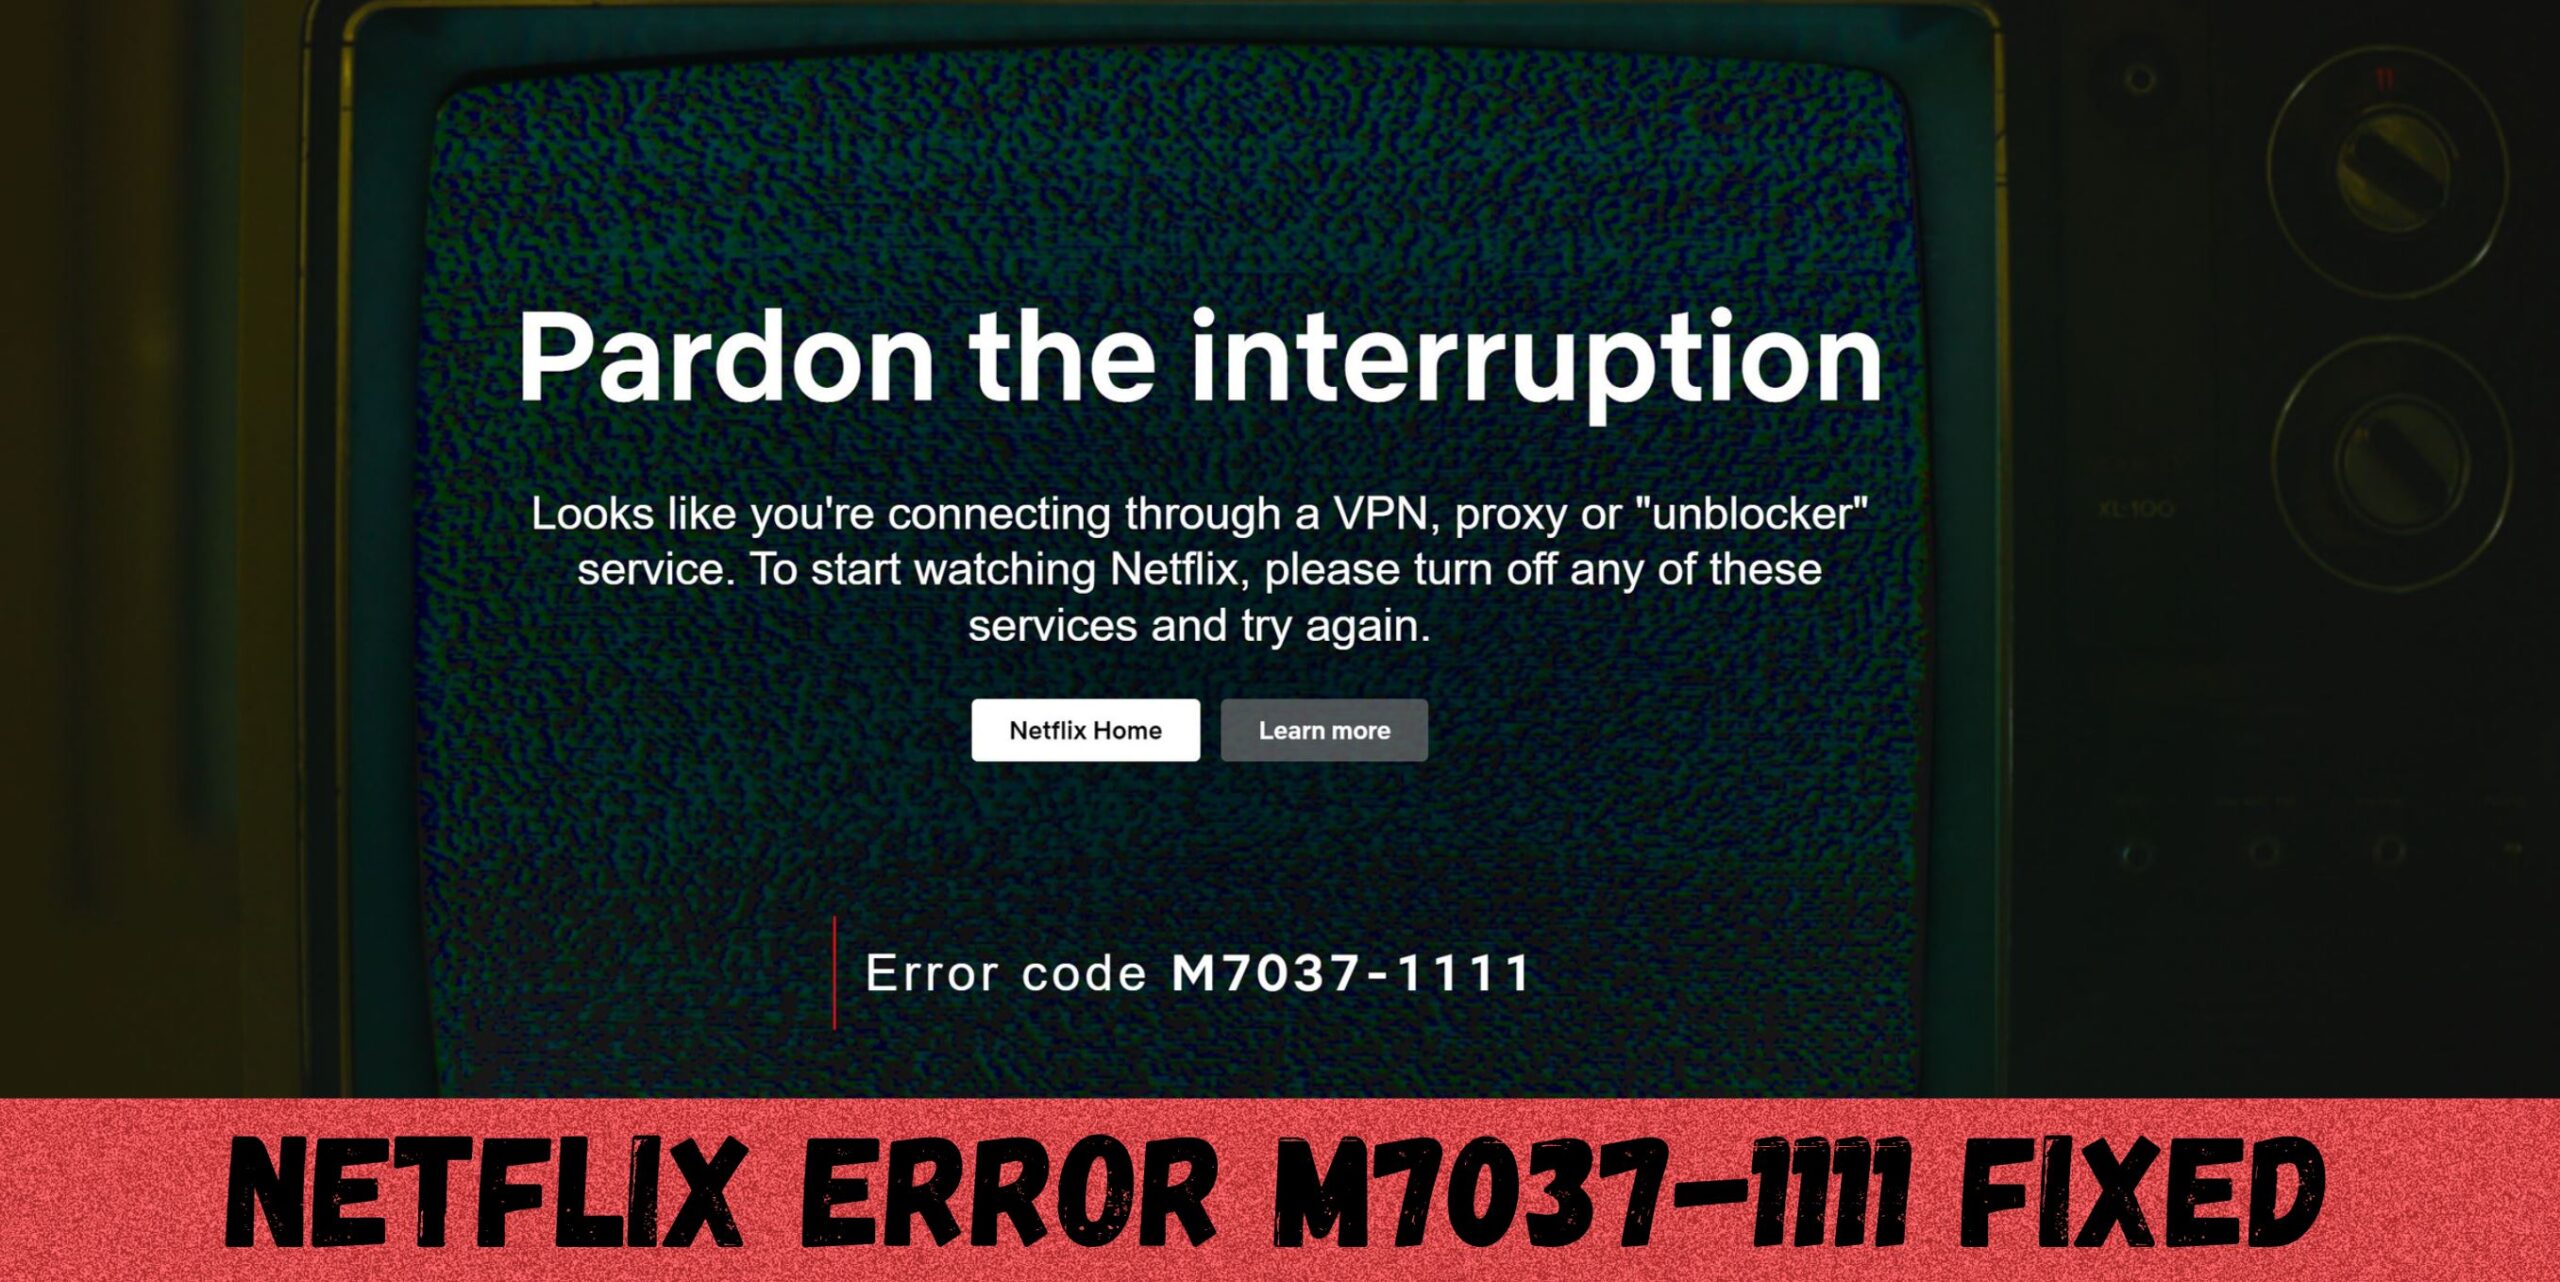 netflix error code m7037-1111 fixed